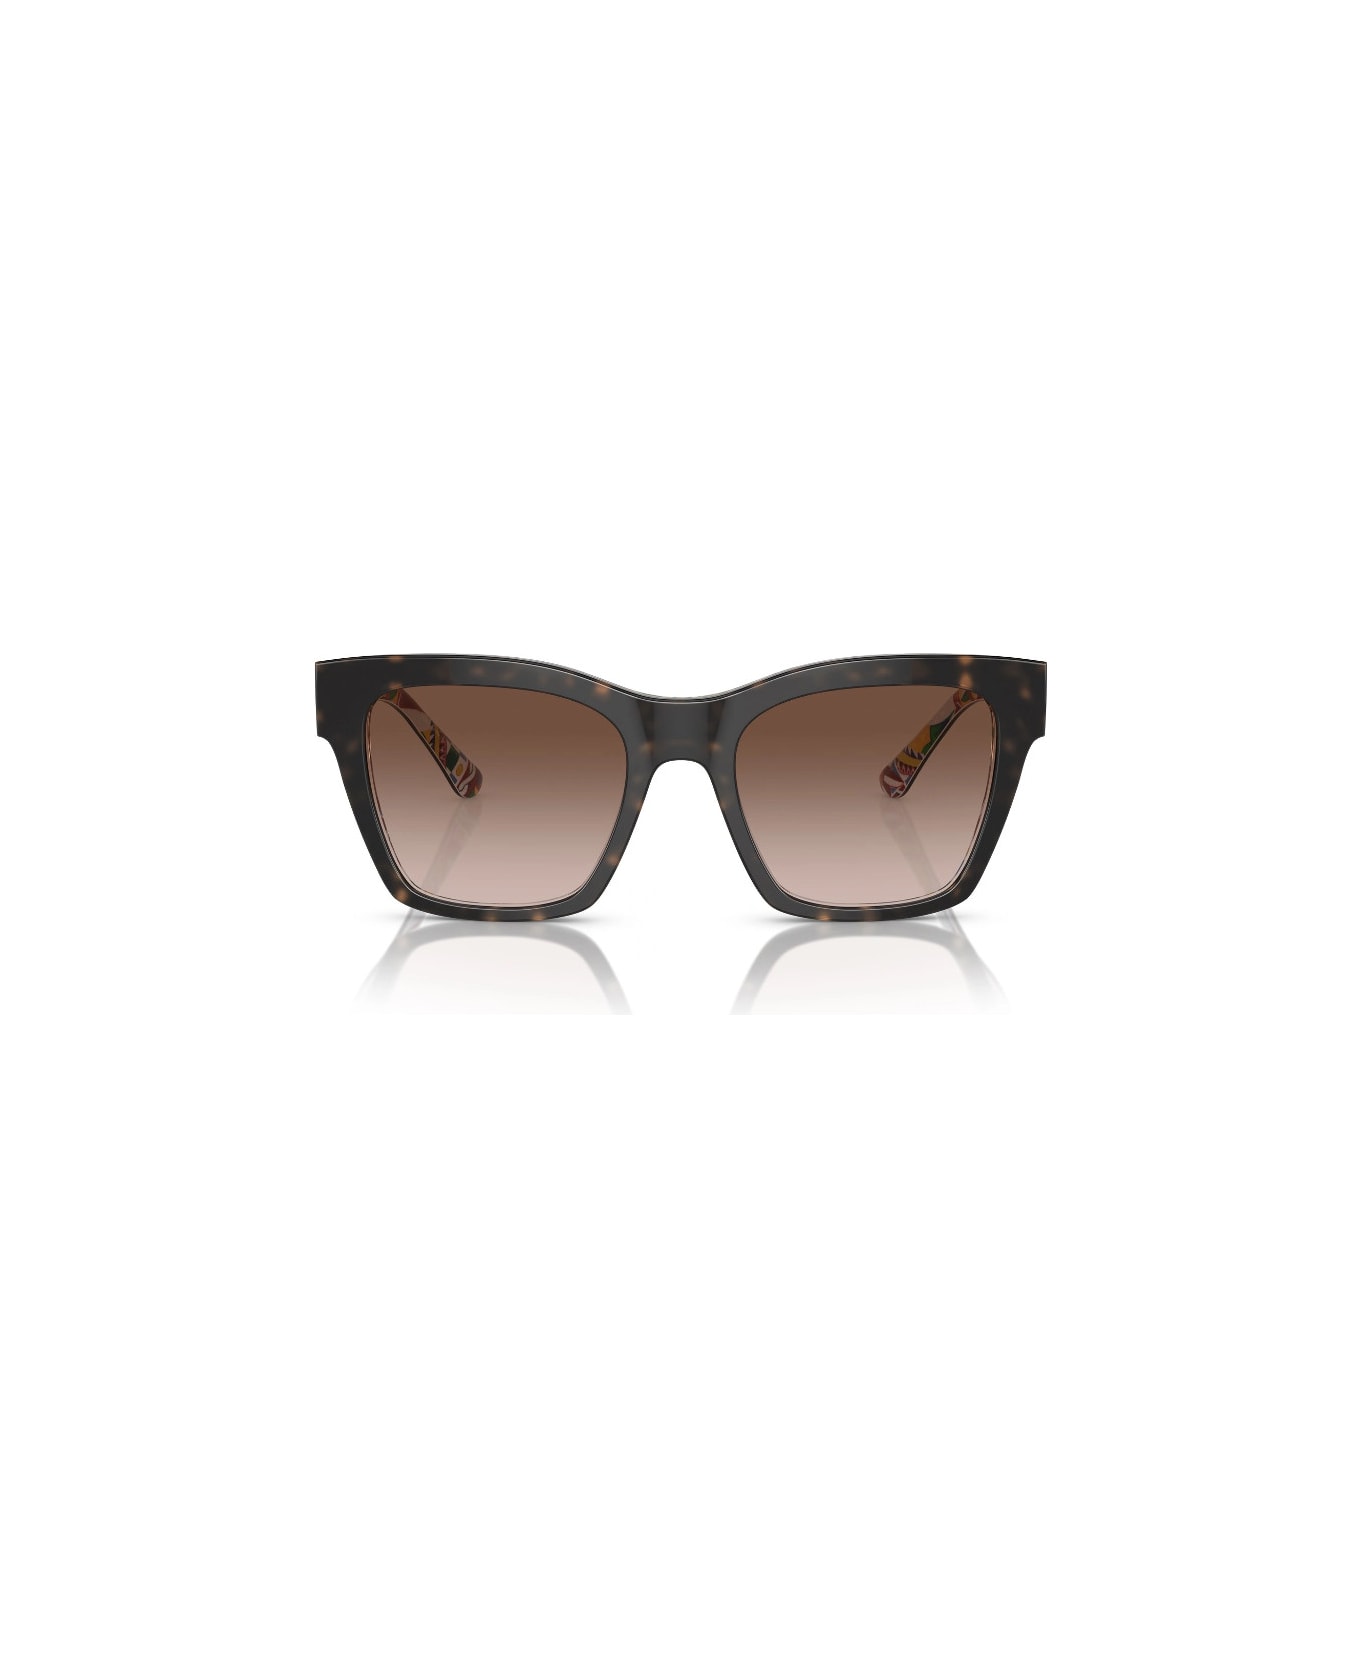 Dolce & Gabbana Eyewear DG4384 3217/73 Sunglasses - Tartarugato